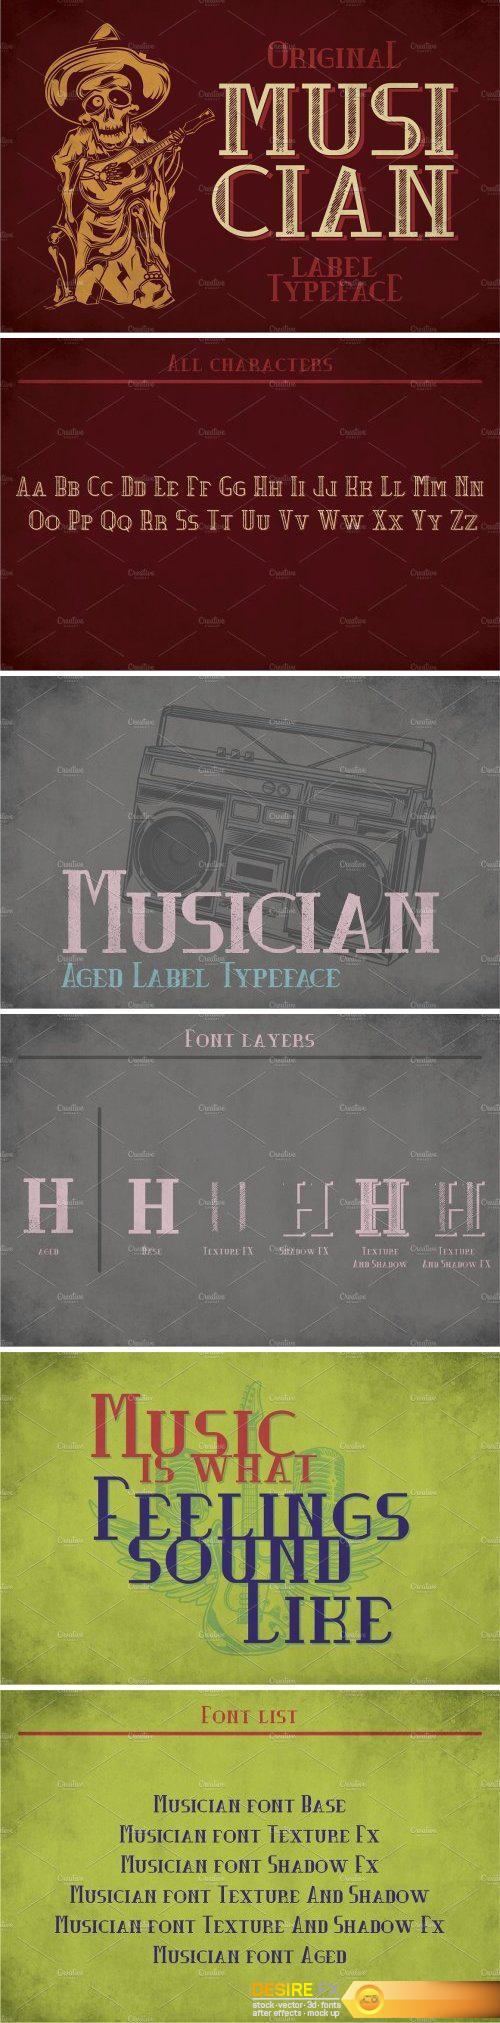 CM - Musician Modern Label Typeface 2091540